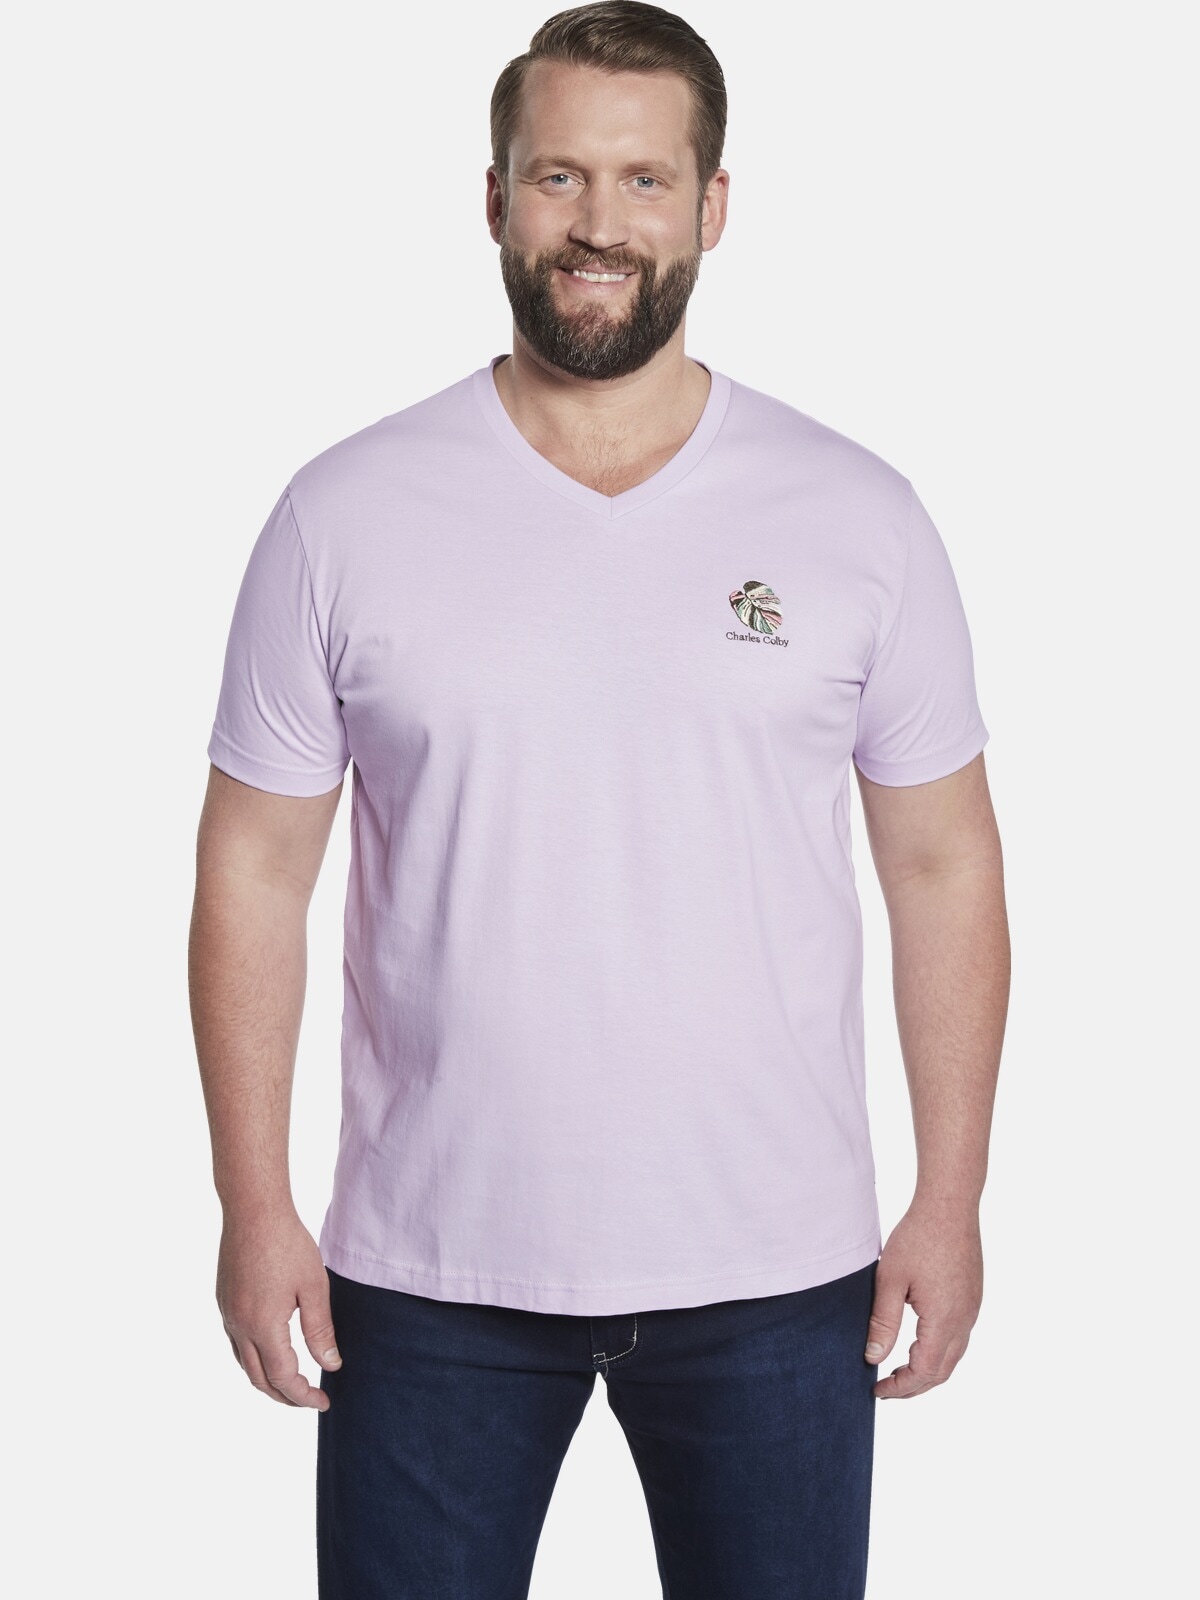 Charles Colby T-Shirt »Doppelpack T-Shirt EARL RHODIN«, (1 tlg.), in zwei Farbvarianten